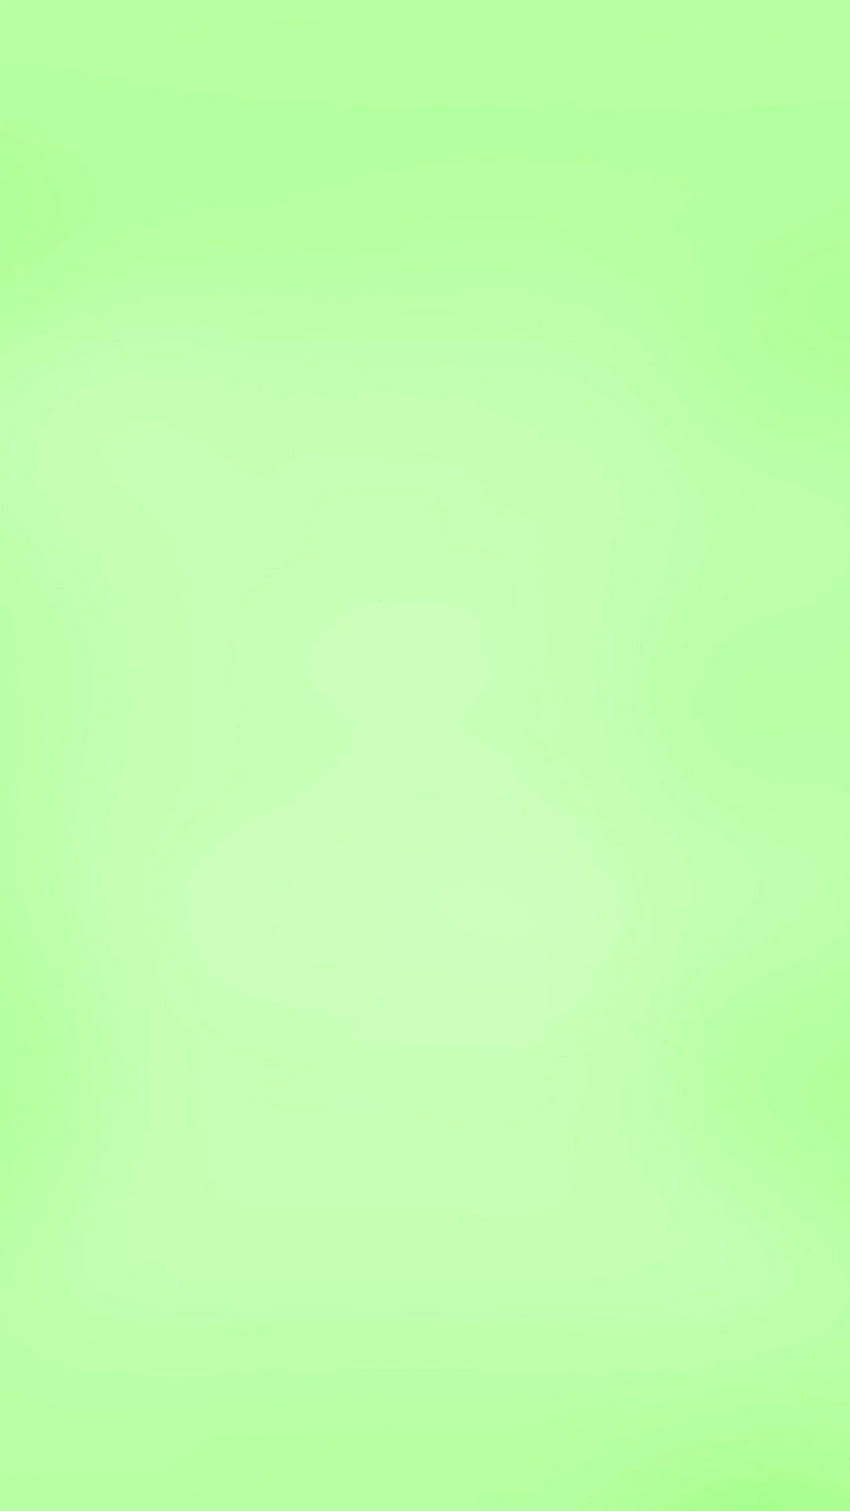 Android Light Green - Melhor Celular . Fundo de cor sólida, papel Scrapbook, cor sólida, verde claro liso Papel de parede de celular HD